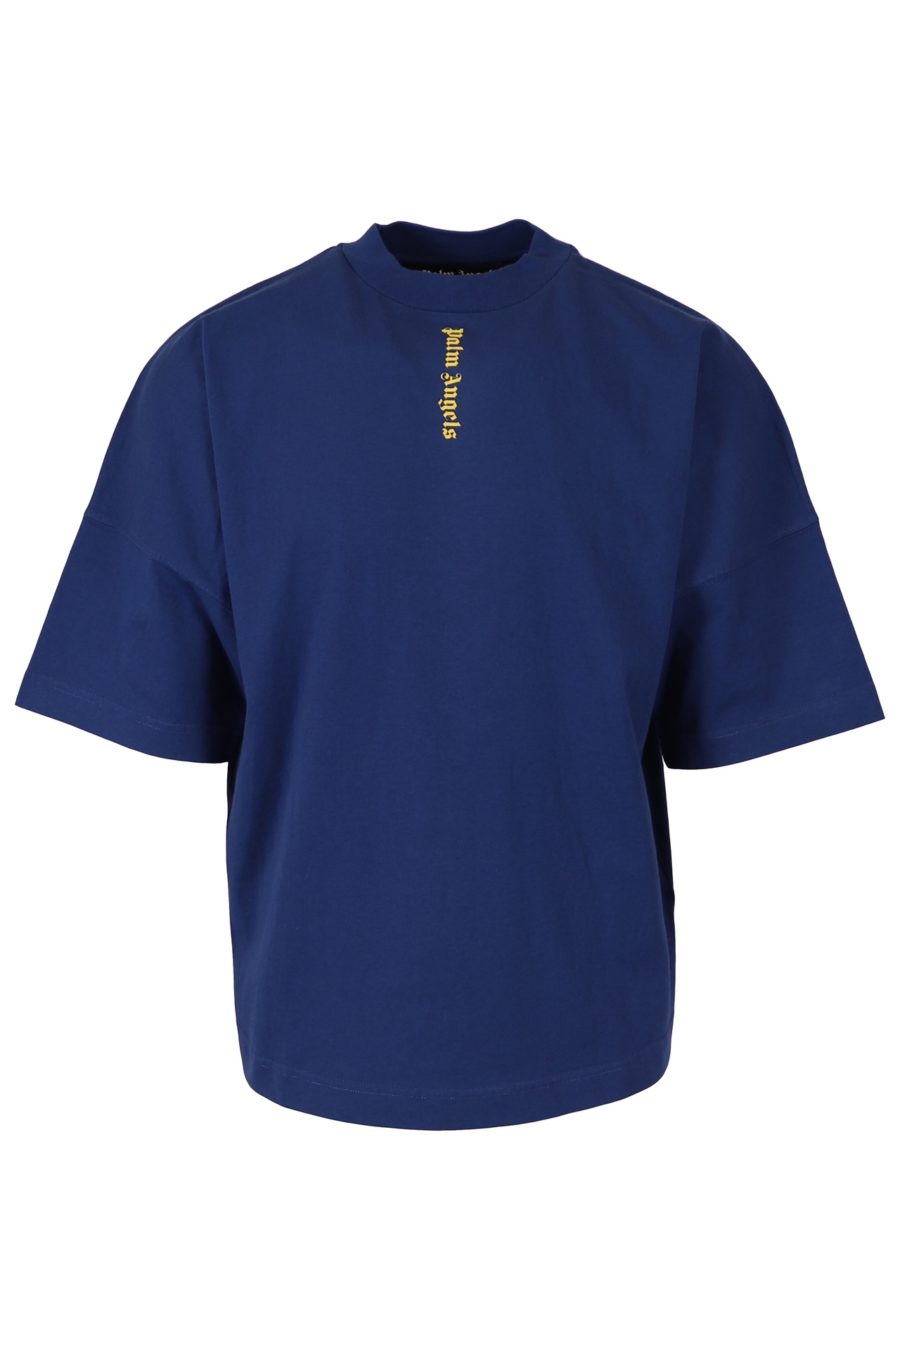 T-shirt Palm Angels blue with yellow vertical logo - 903bc0ec2a8179621e1724c2dbadc8330e1ccbd6